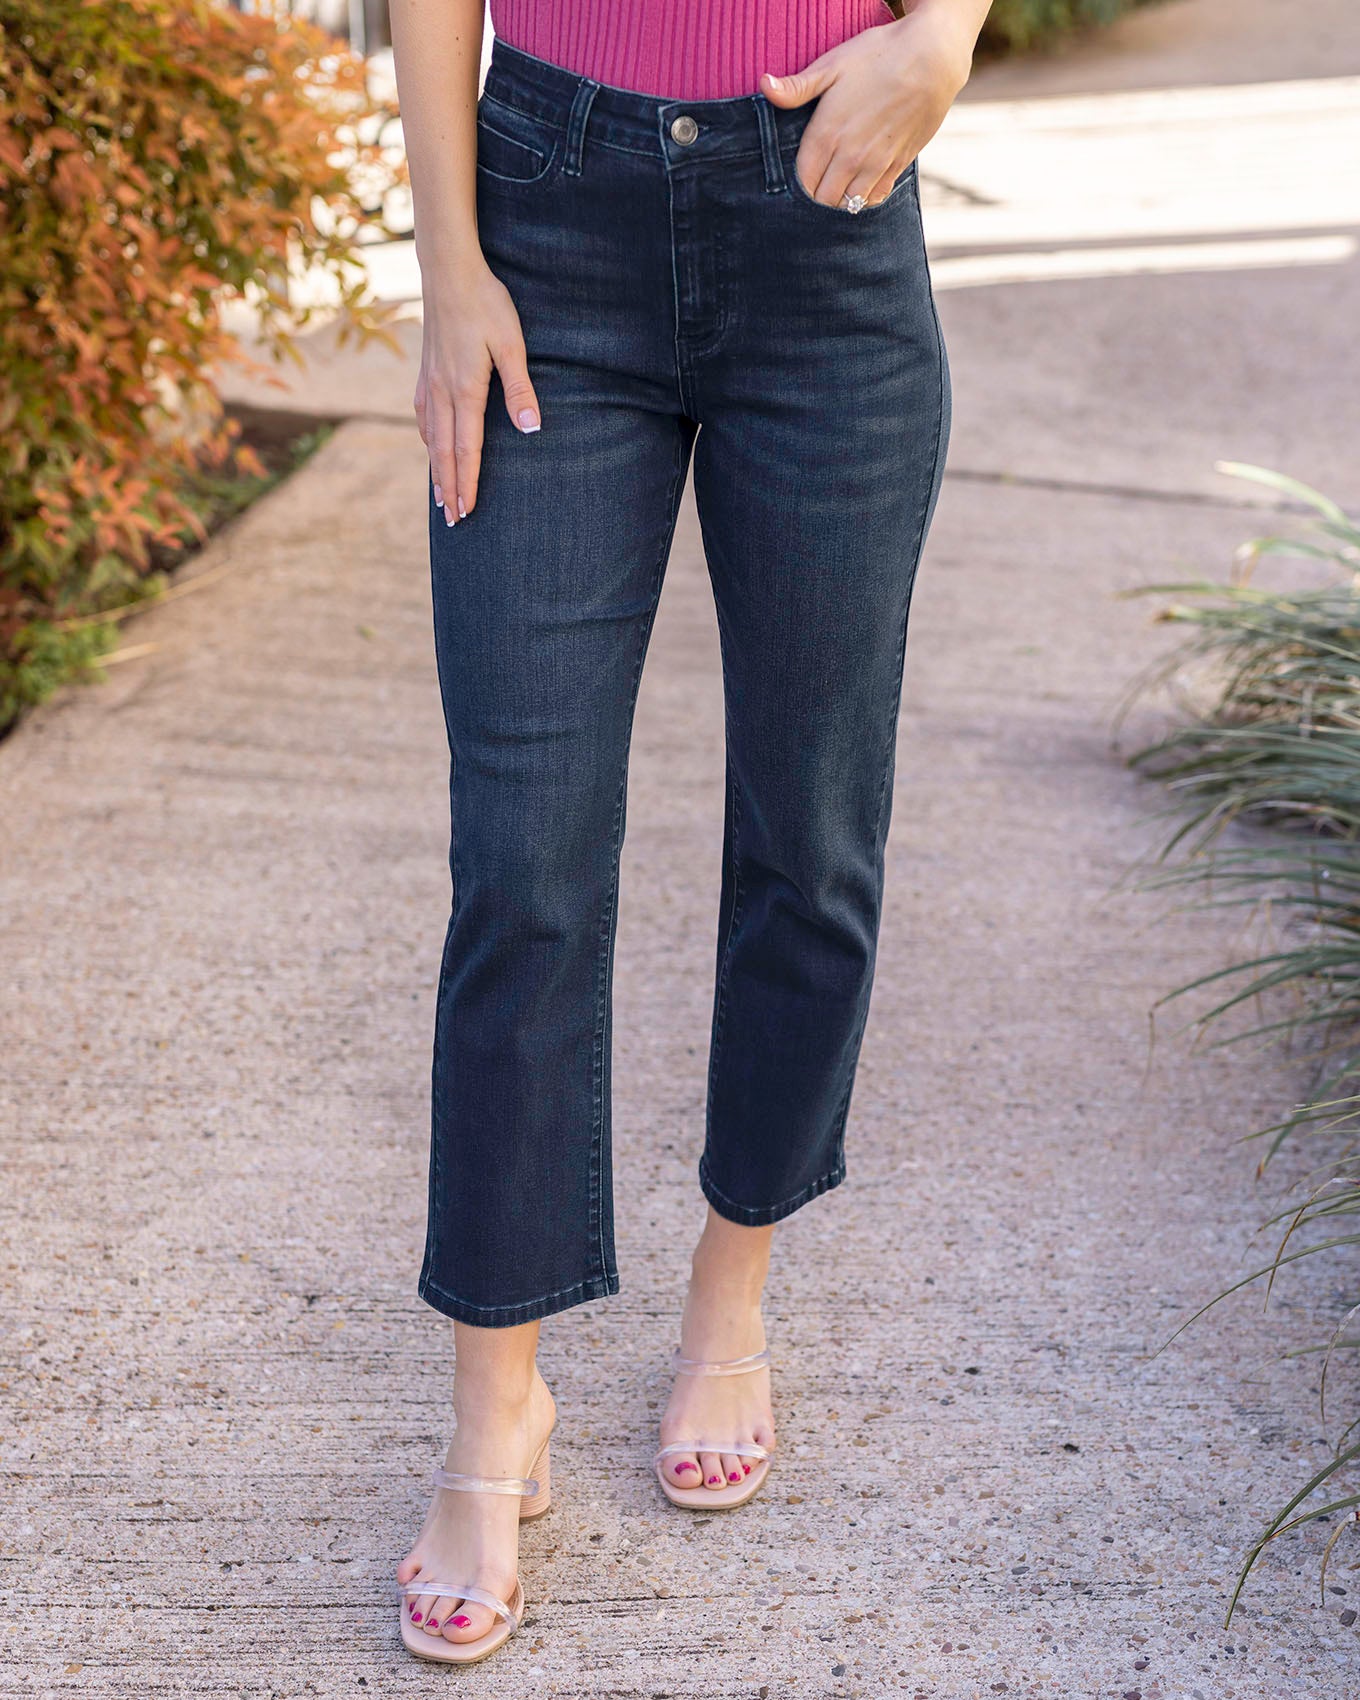 Just Love Women's Denim Jeggings with Pockets - Comfortable Stretch Jeans  Leggings (Dark Denim, 2X)